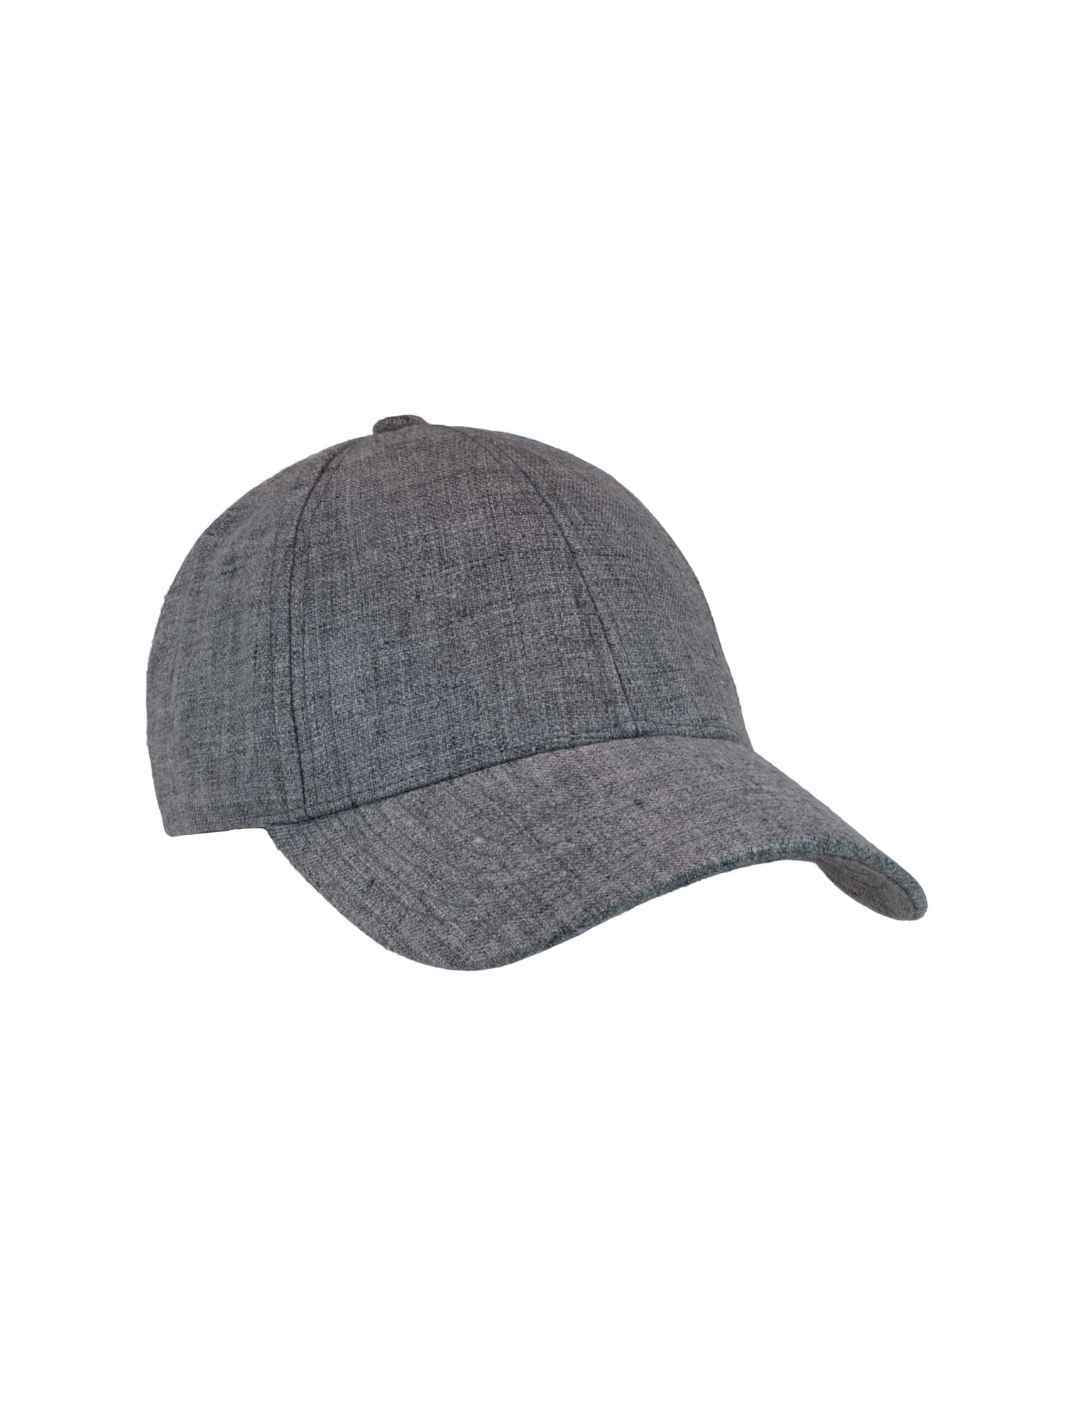 Varsity Headwear Accessories Cap | Pebble Grey Linen